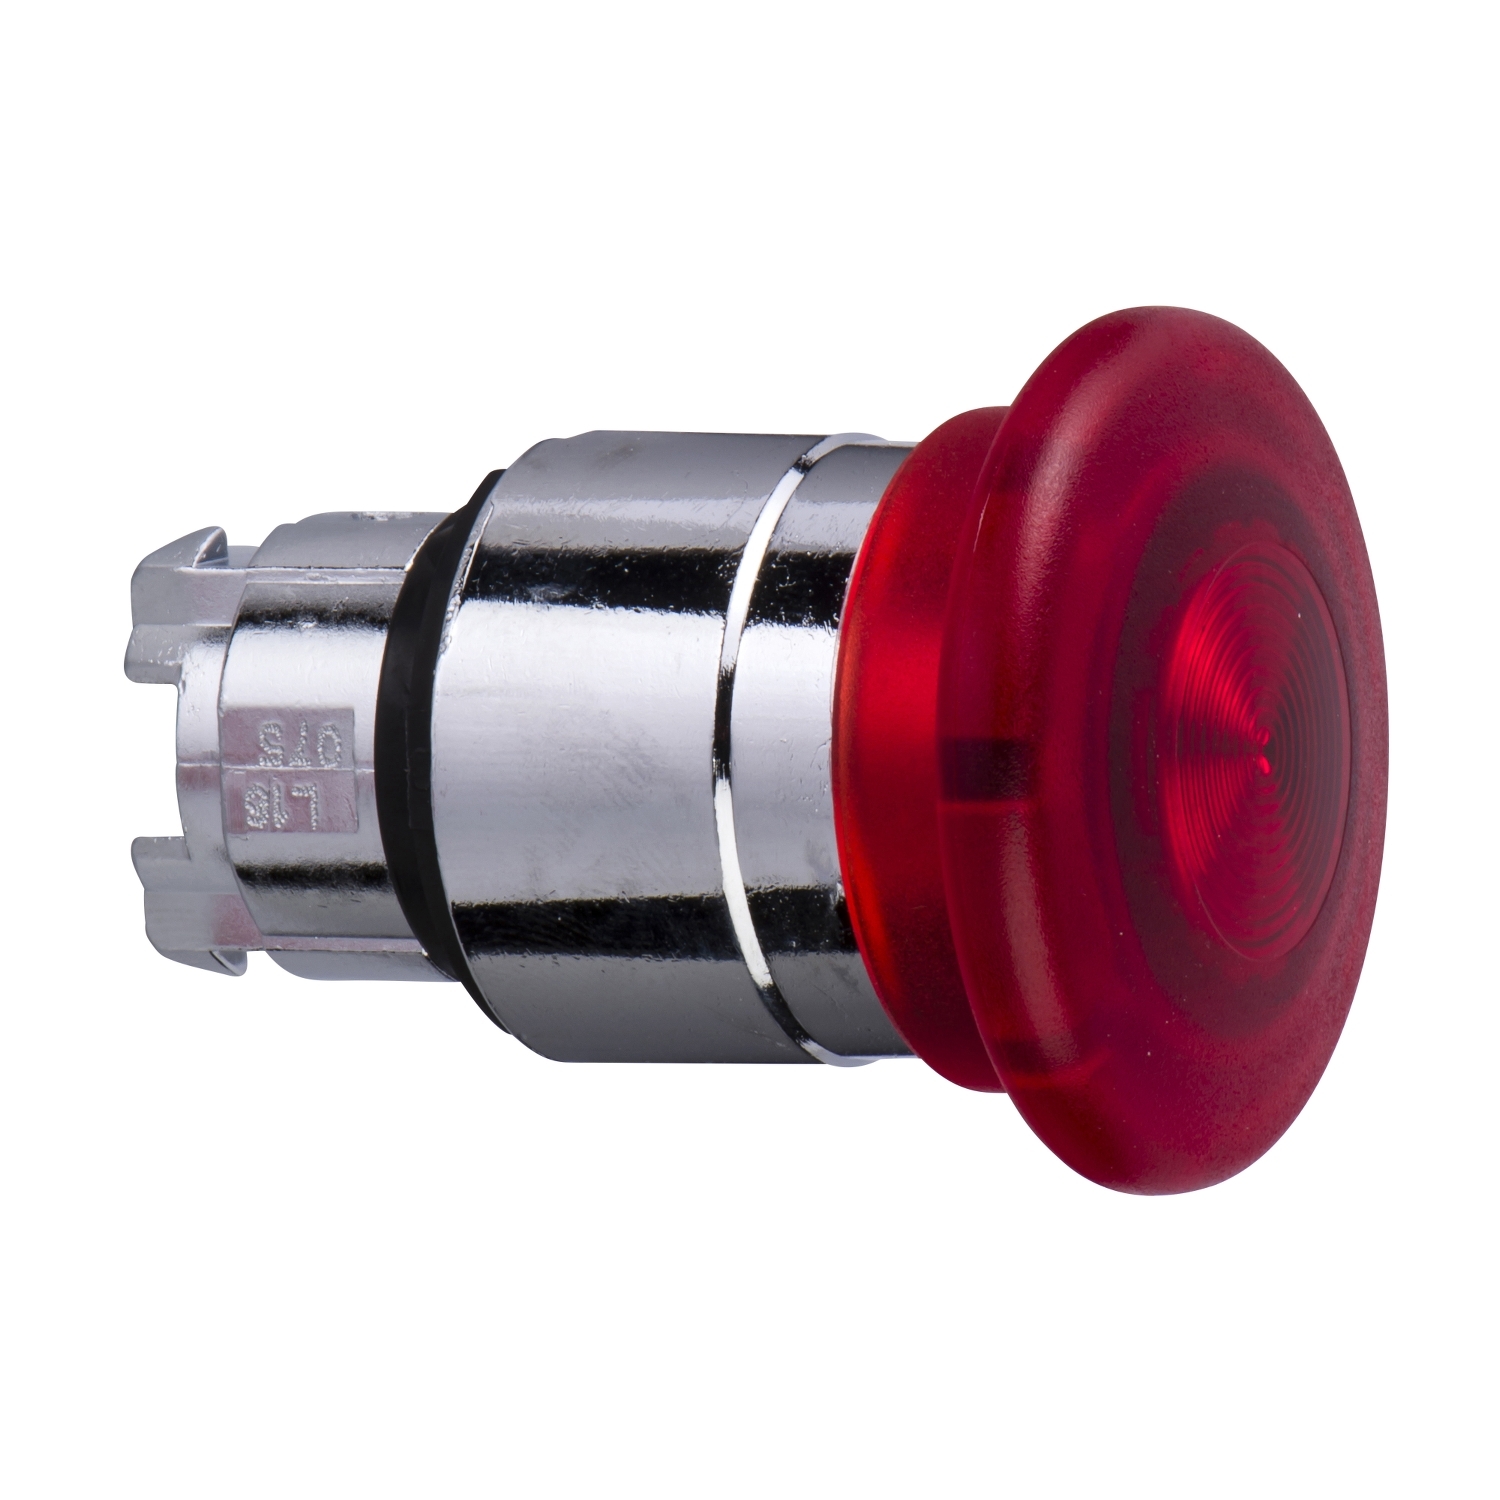 Head for illuminated push button, Harmony XB4, metal, red mushroom 40mm, 22mm, universal LED, spring return